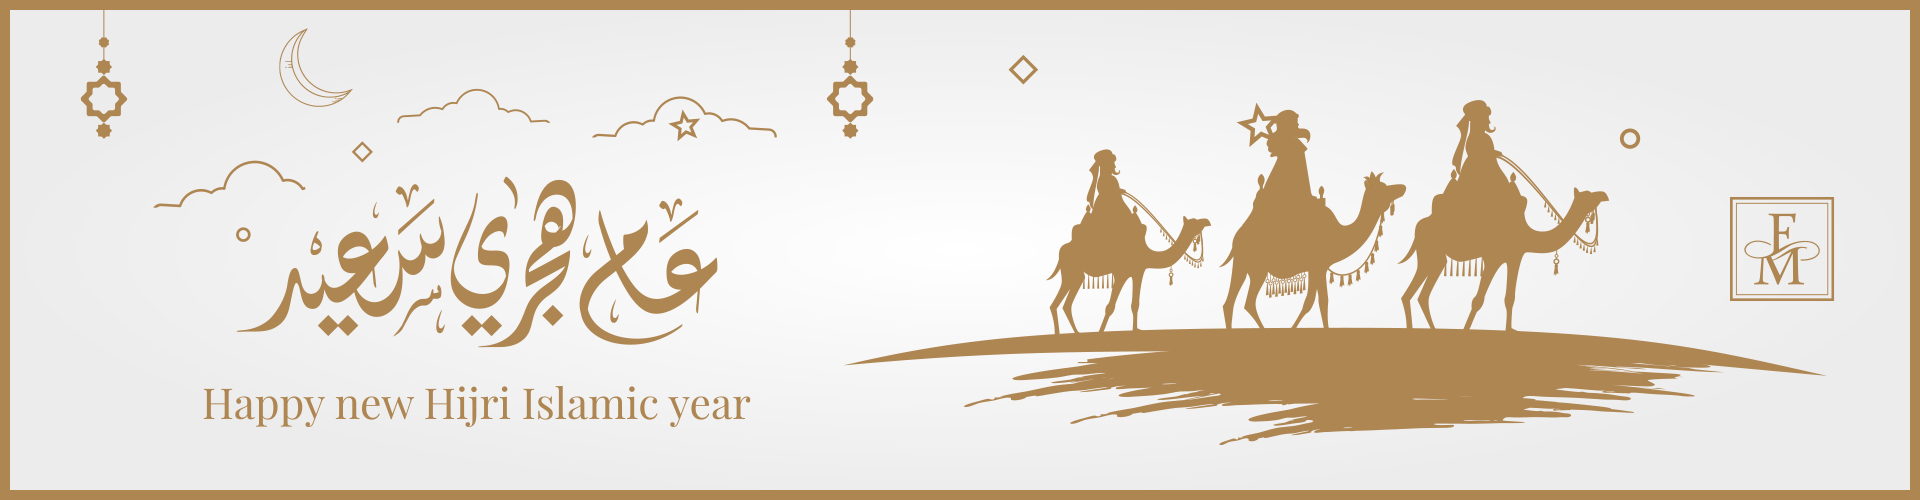 HAPPY NEW ISLAMIC YEAR!